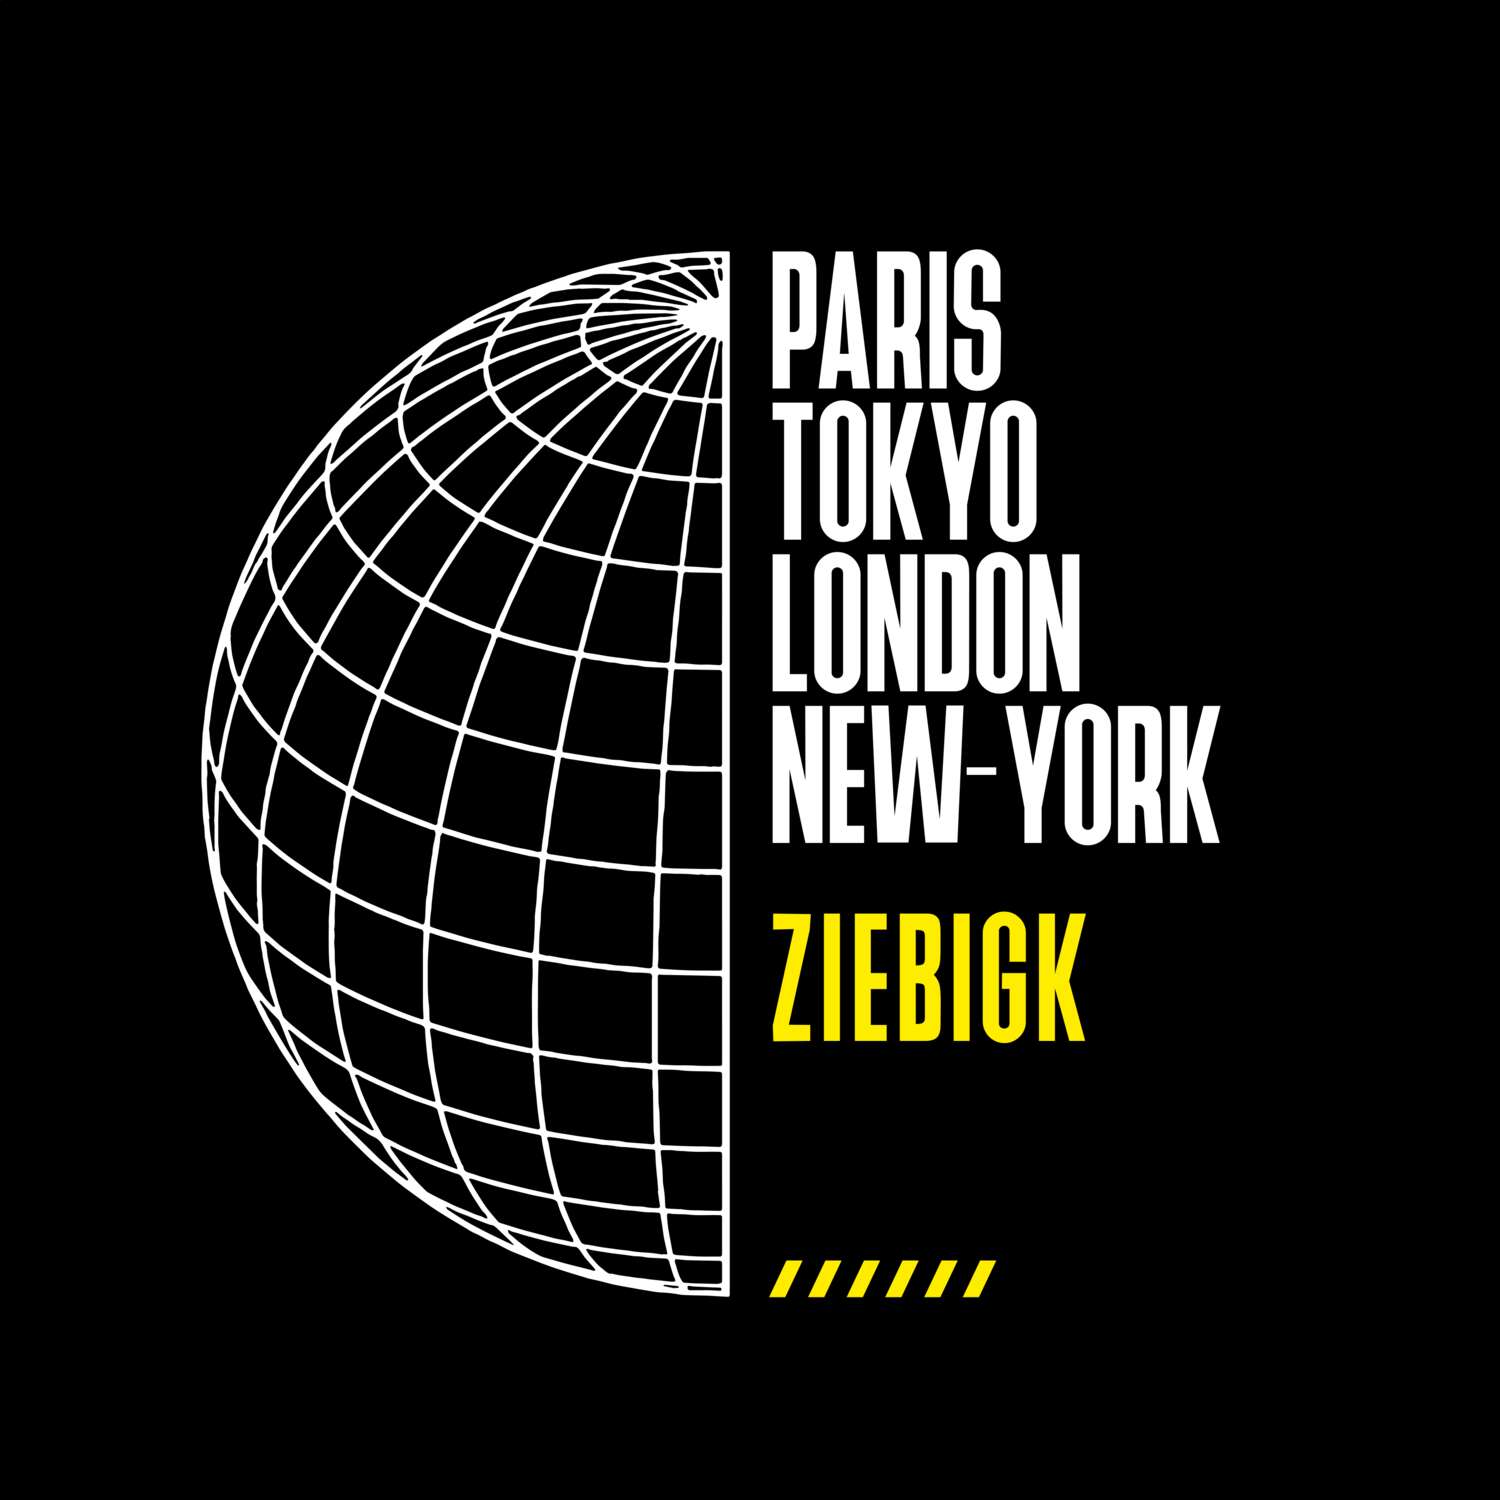 Ziebigk T-Shirt »Paris Tokyo London«